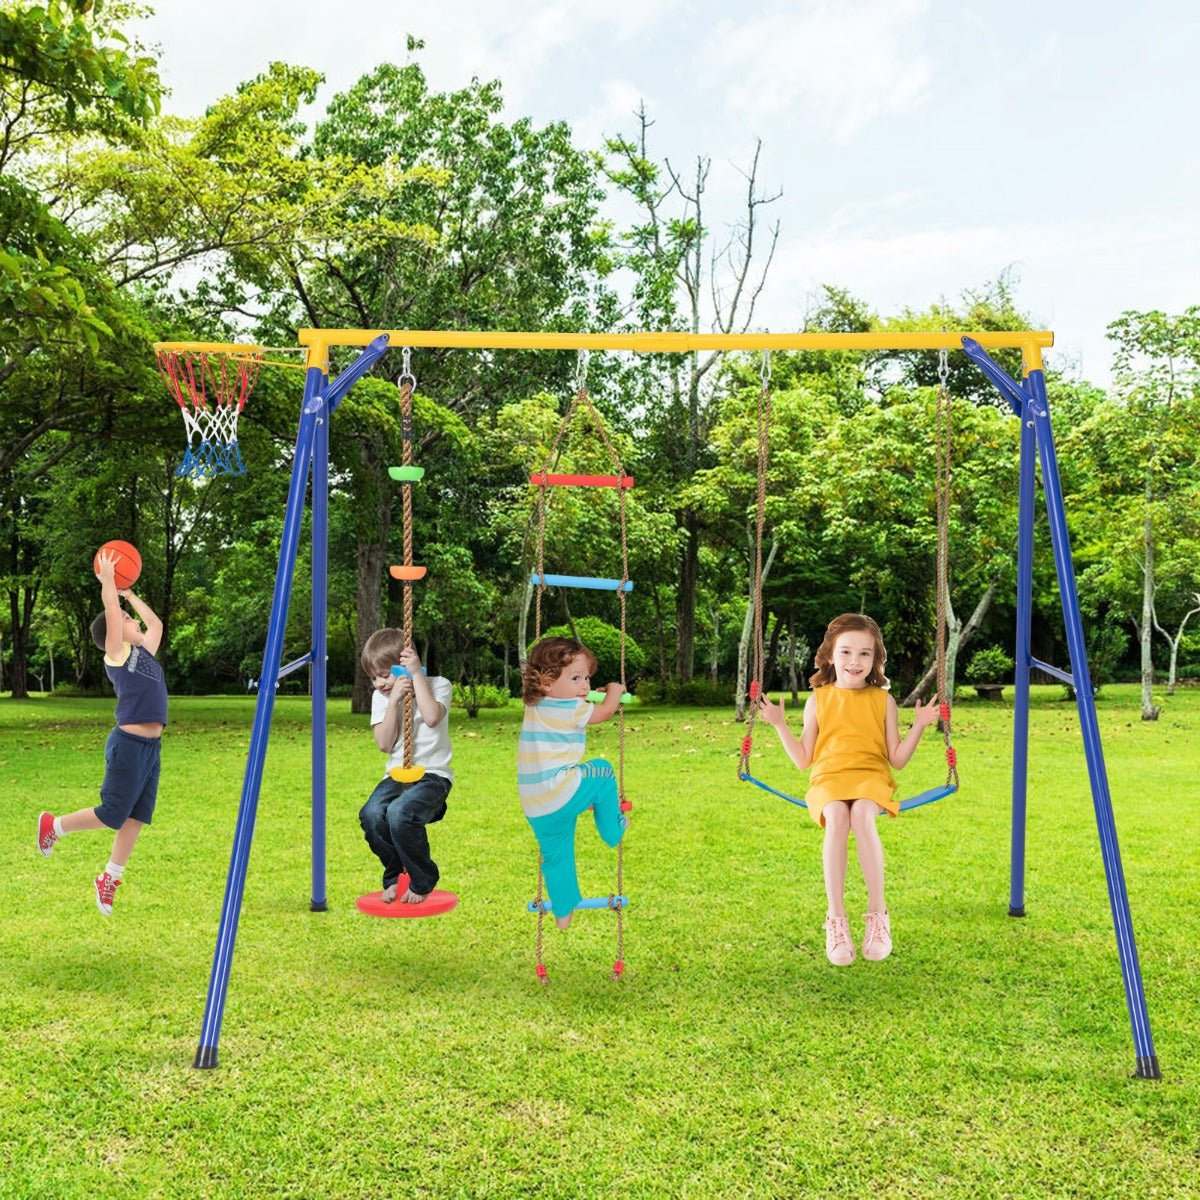 4 in 1 Swing Set with Basketball Hoop for Kids - Kids Mega Mart